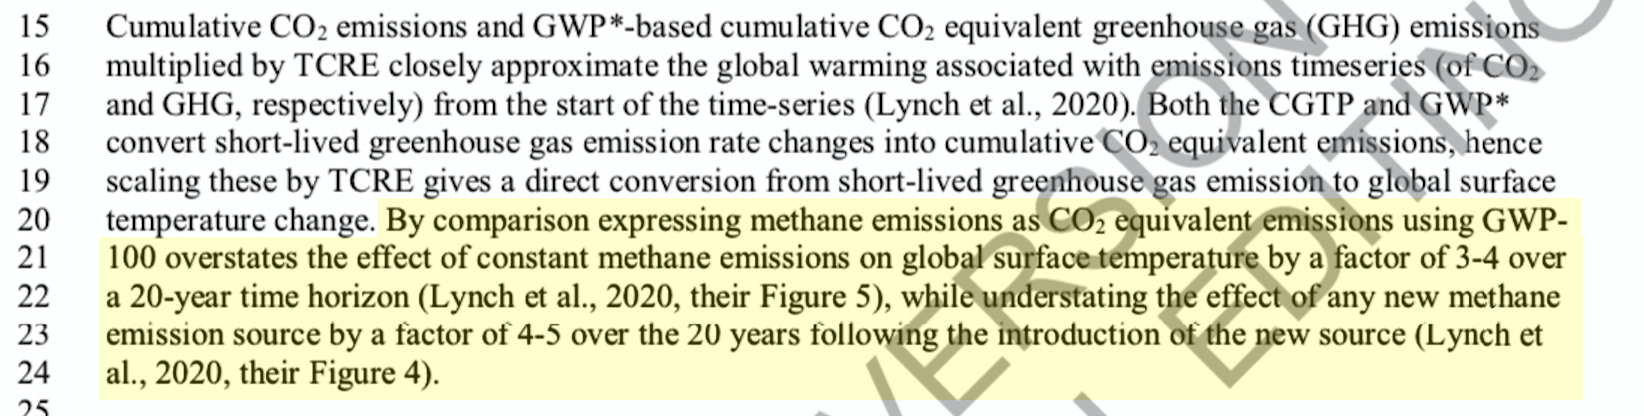 IPCC AR6 Text on Methane's Warming Impact vs CO2e